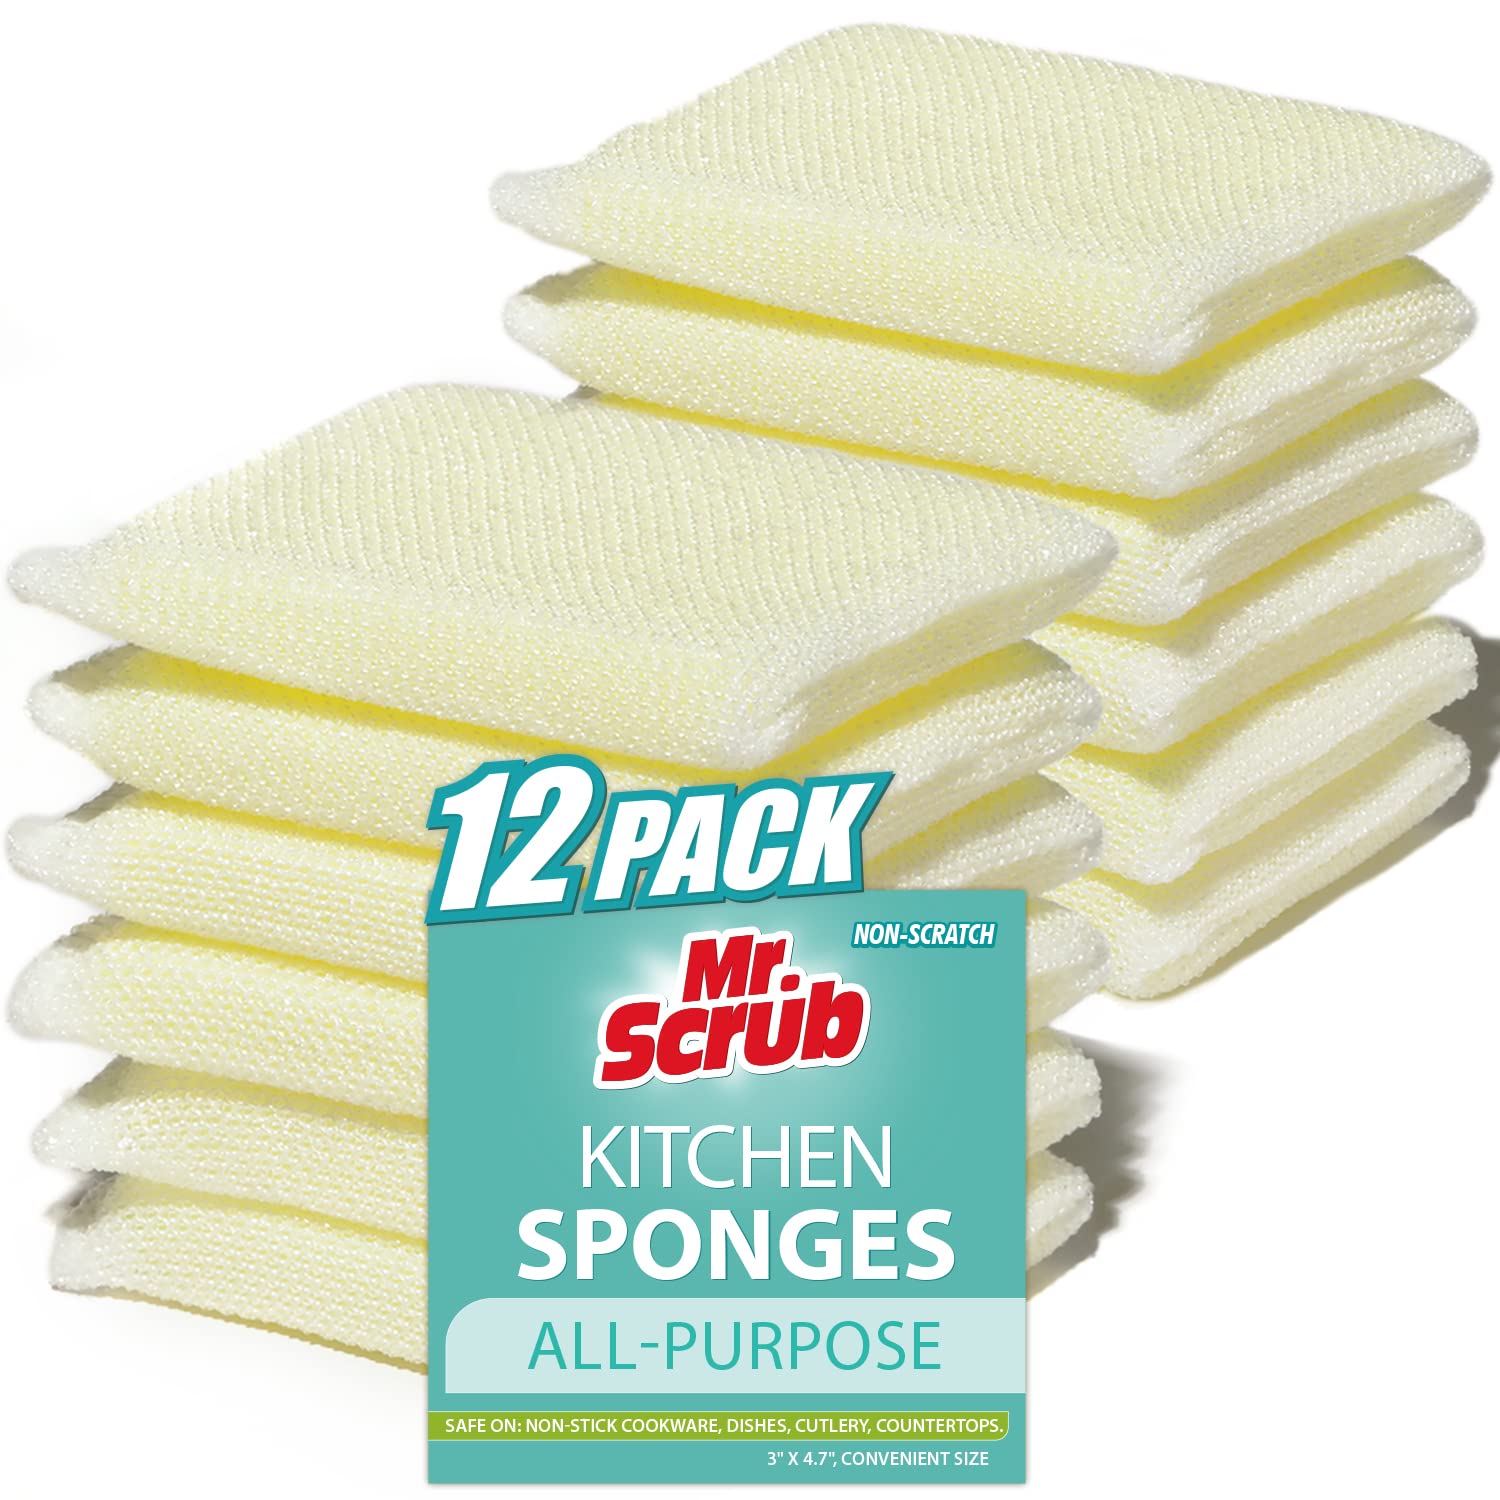 12 Pack Multi-Purpose Scrub Sponges Kitchen, Dish Sponge, Non-Scratch Microfiber